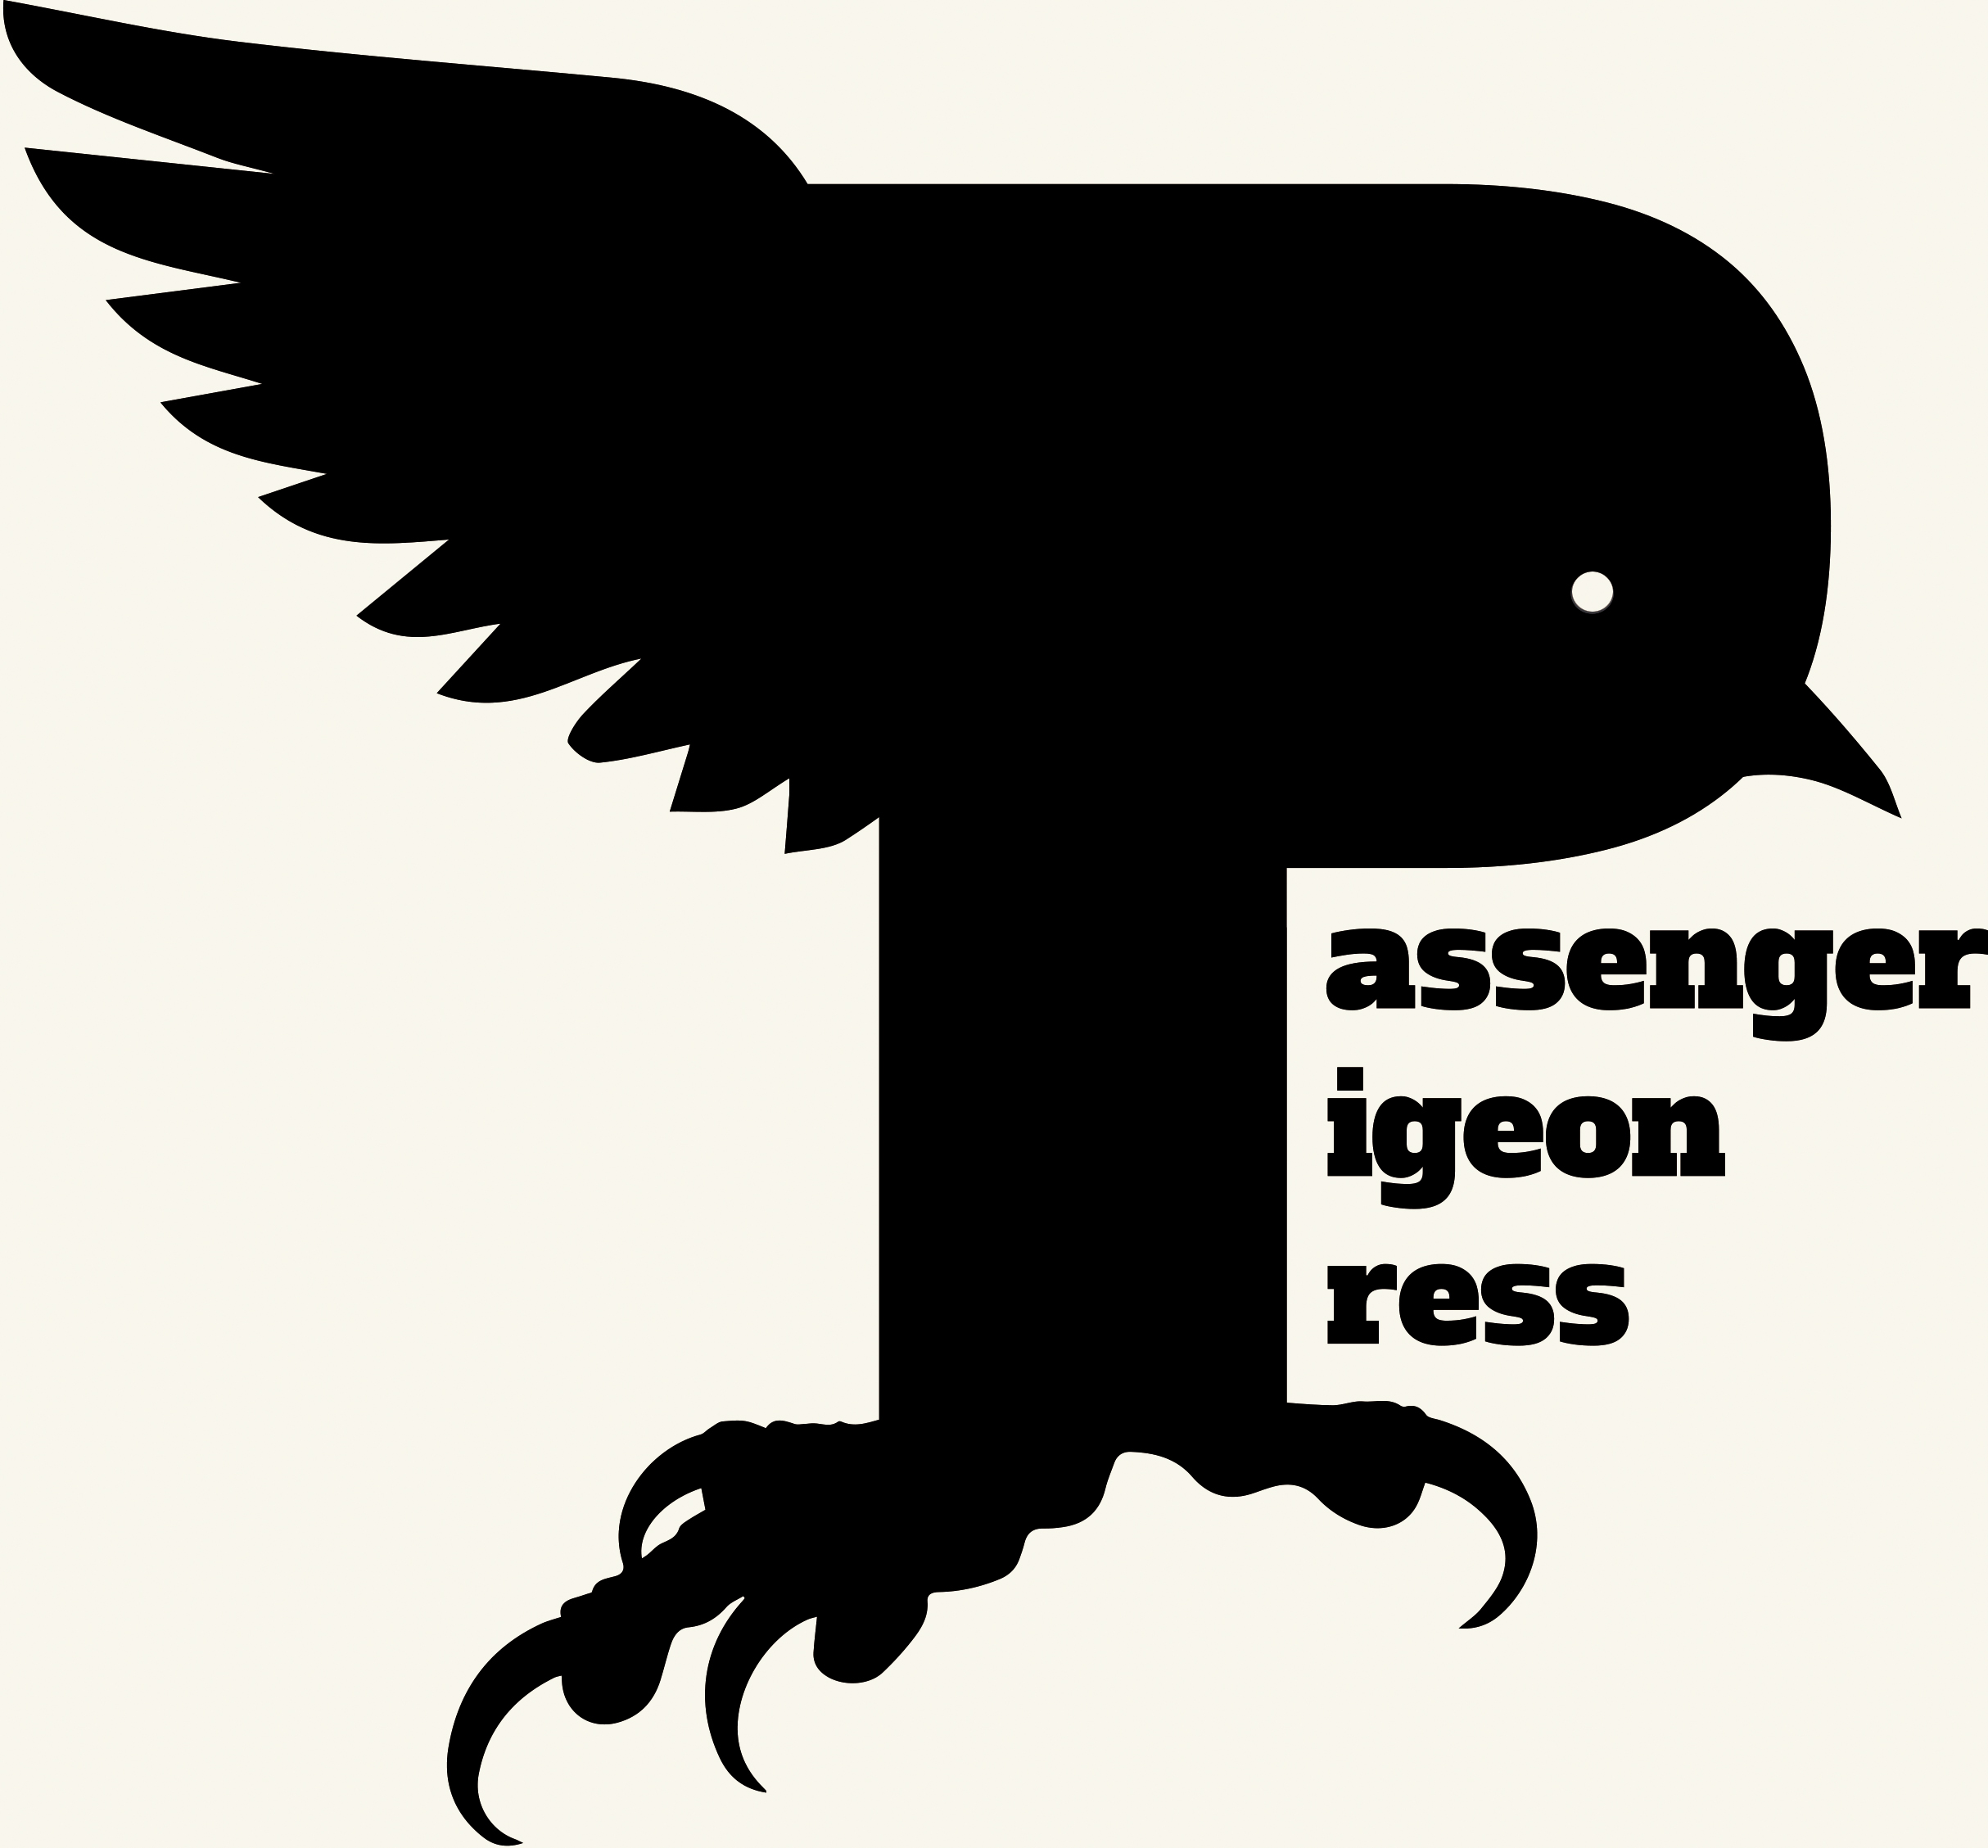 Passenger Pigeon Press image